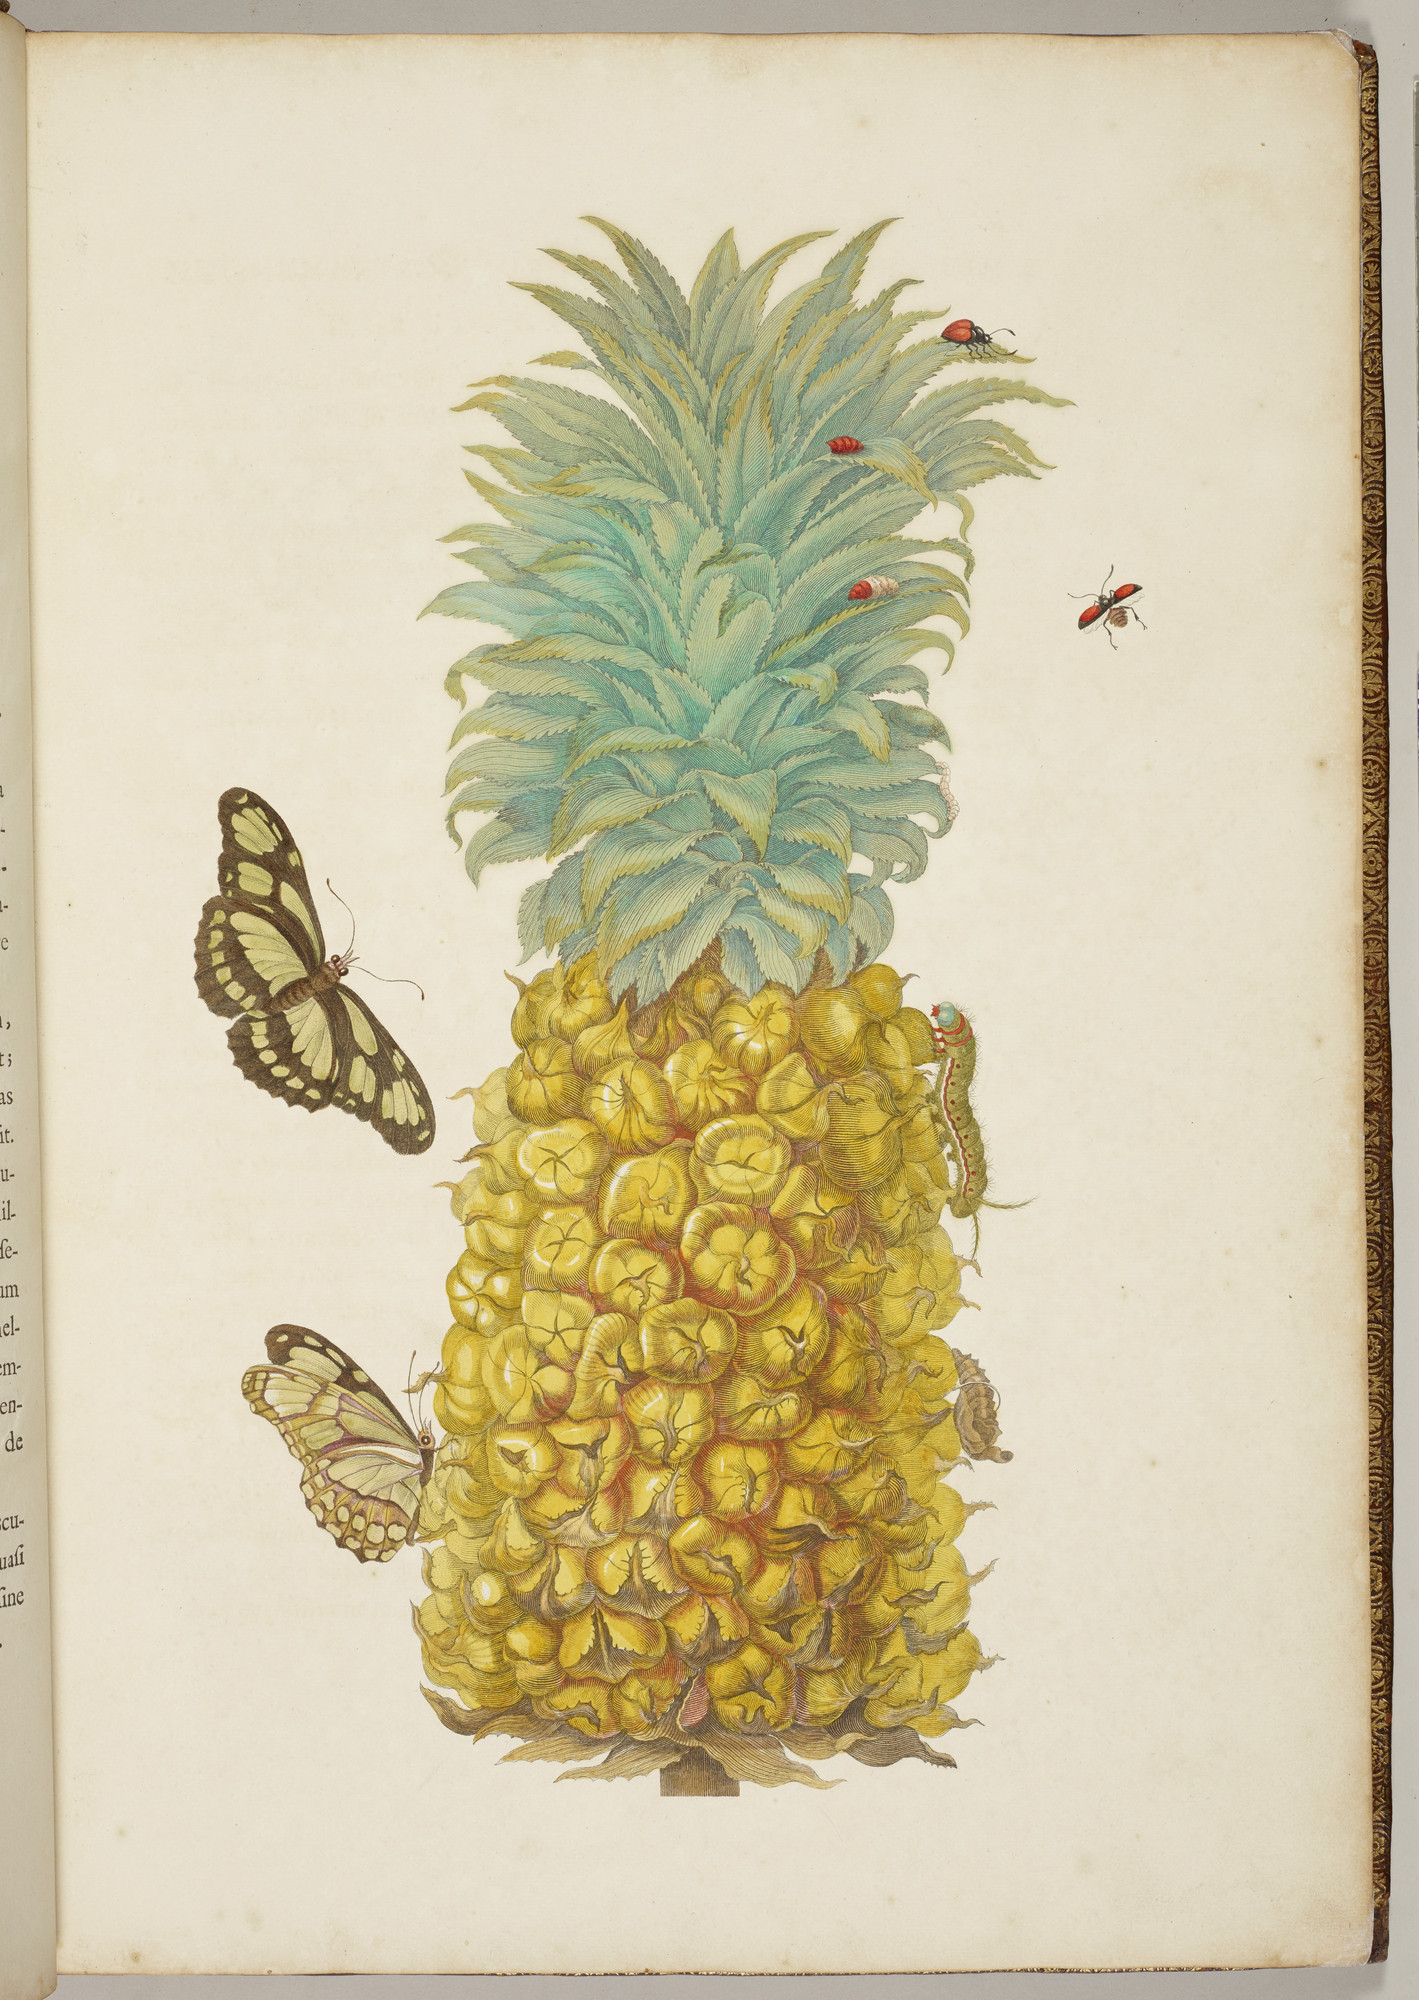 菠蘿 by Maria Sibylla Merian - 1705 年 - 53.0 x 4.0 公分 